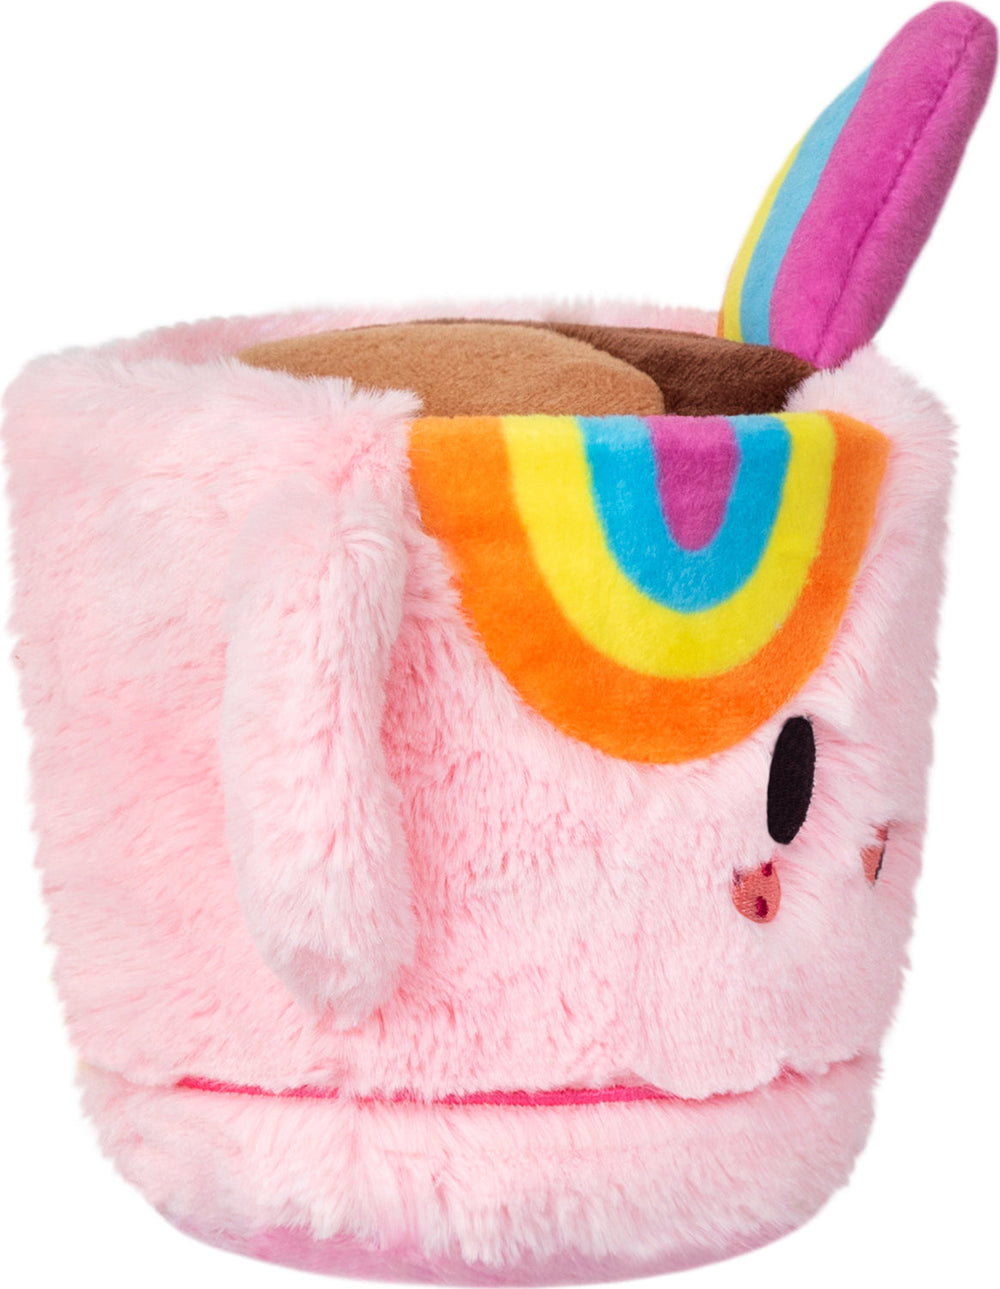 Squishable Toy Stuffed Plush Squishables Alter Ego Coffee - Rainbow